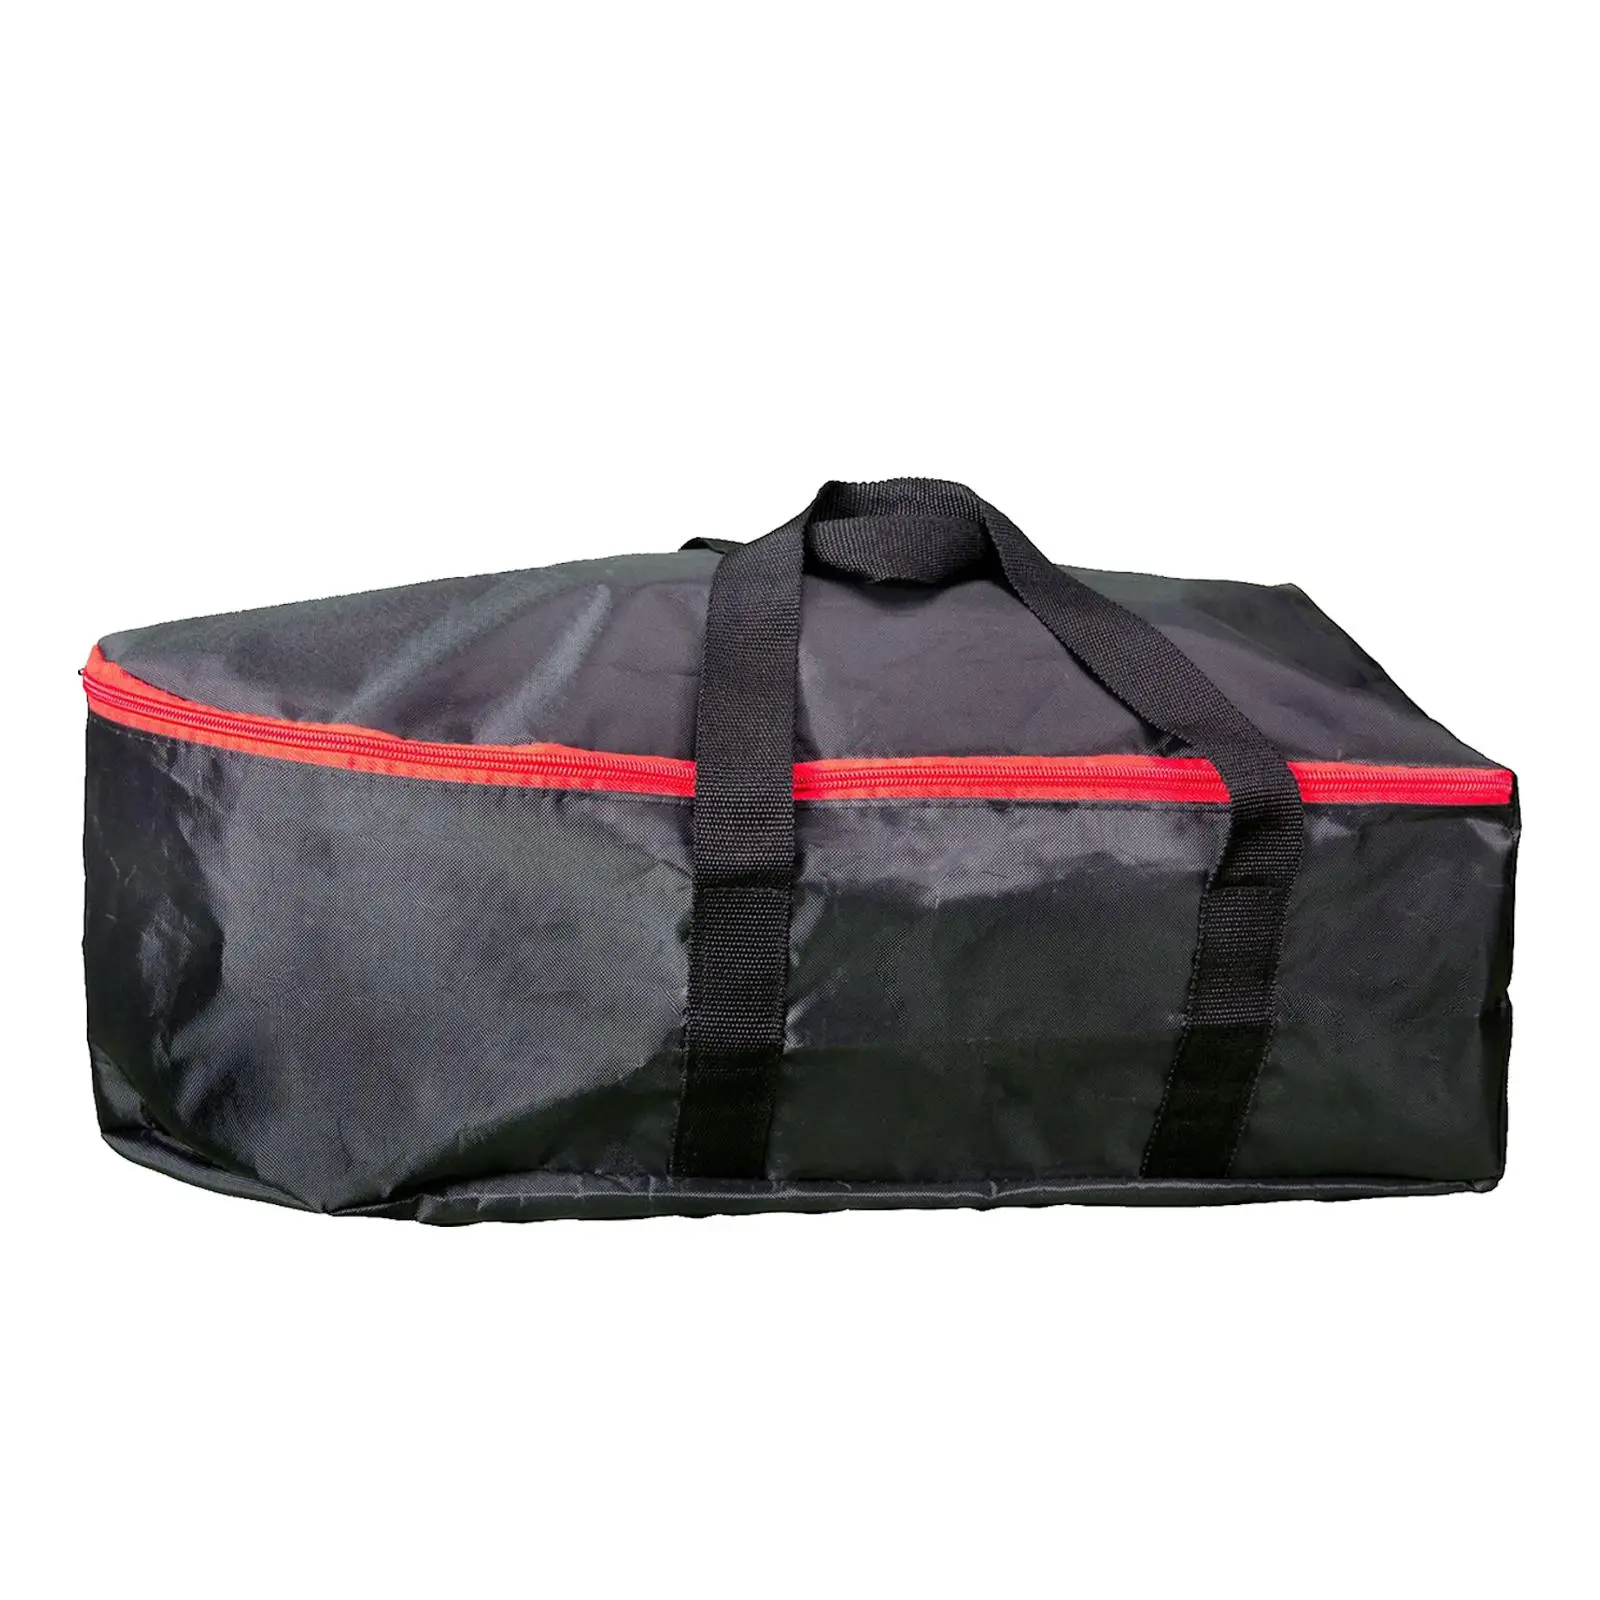 Bait Boat Storage Double Zippers Durable Carry Handbag Boat Gear Bag for Outdoor Activities